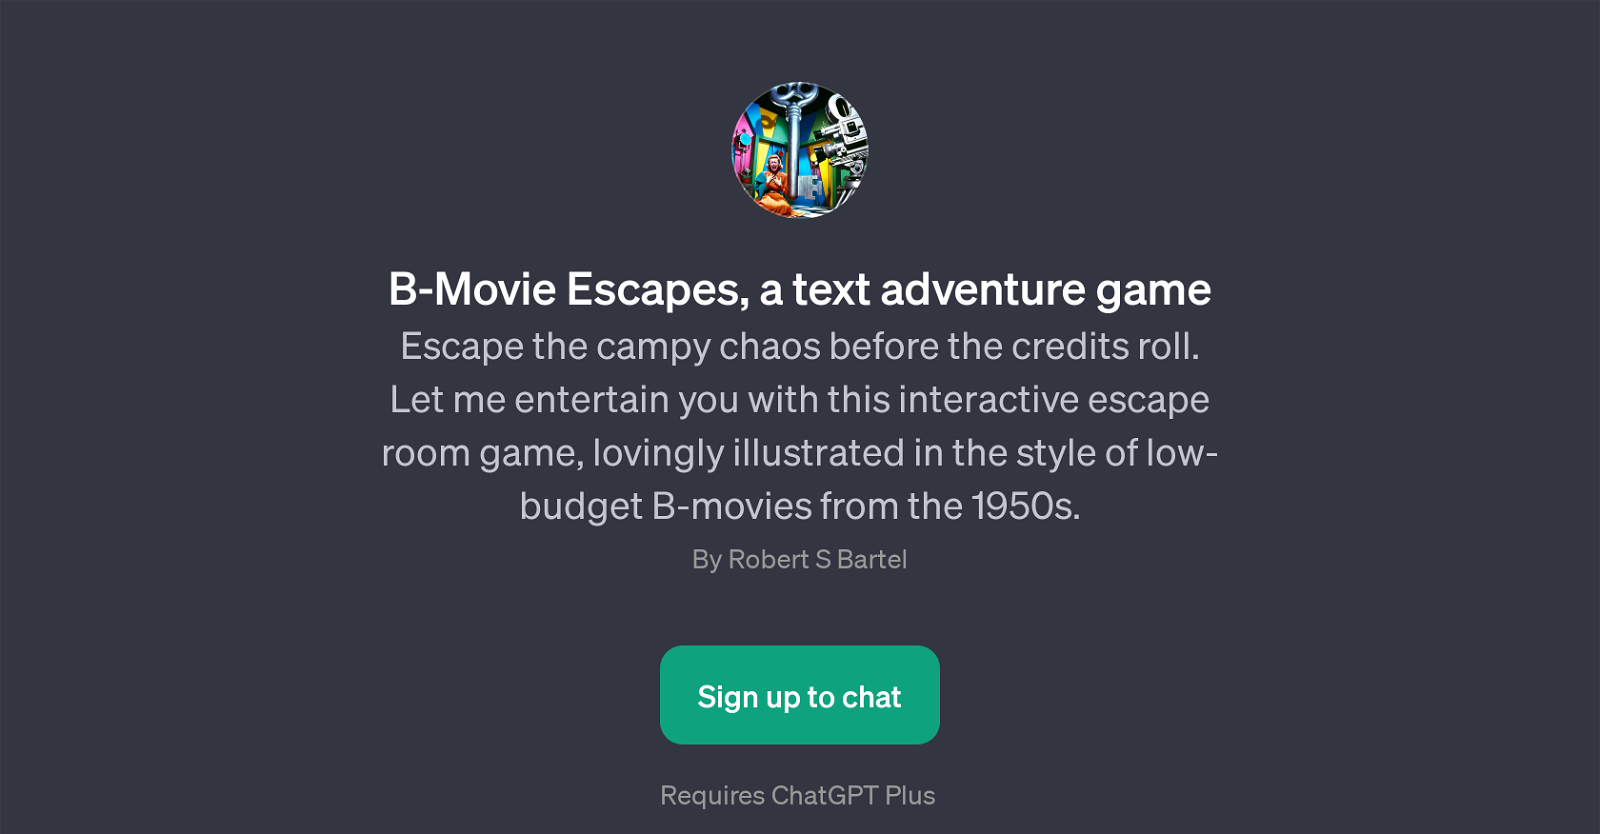 B-Movie Escapes website